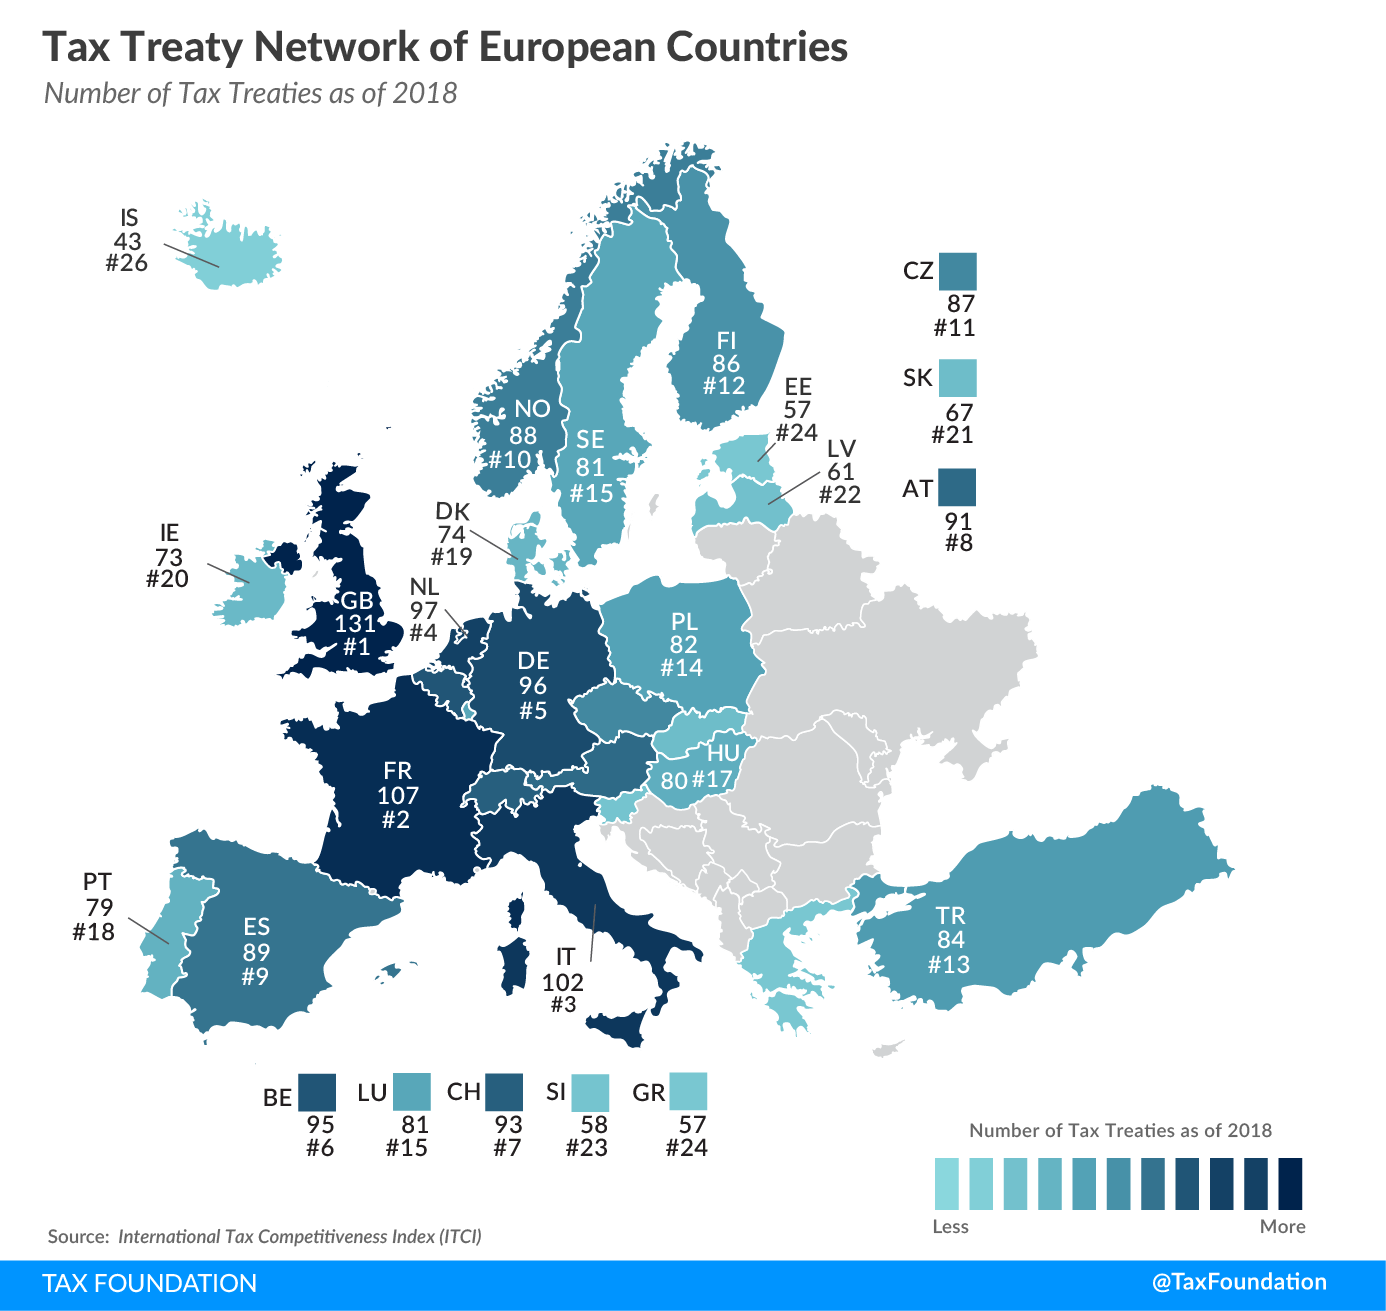 European tax treaty 2019 tax treaty network of european countries 2019